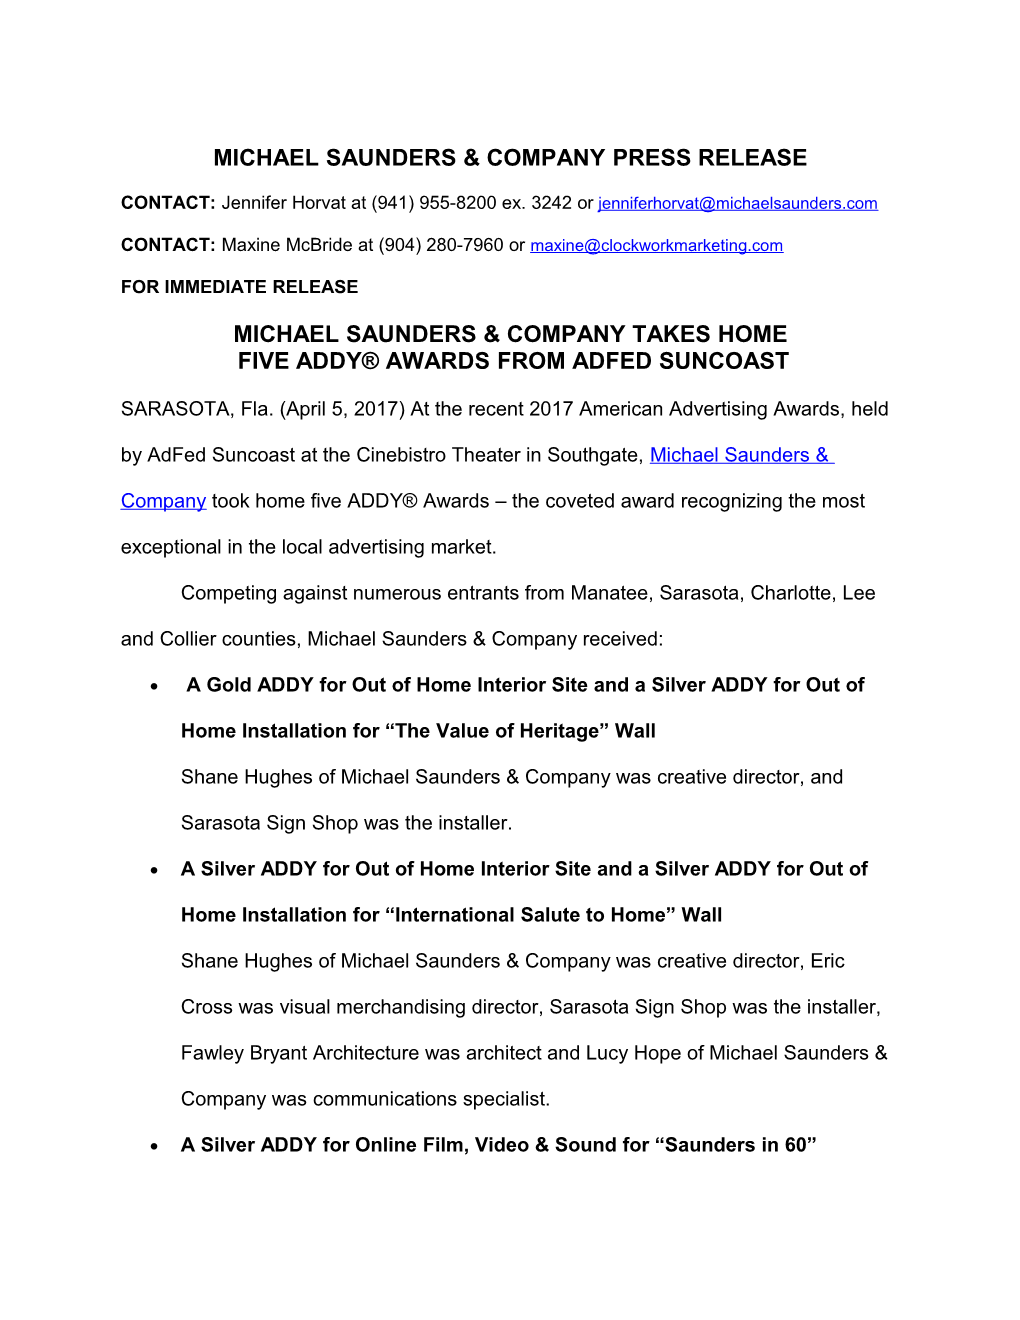 Michael Saunders & Company Press Release